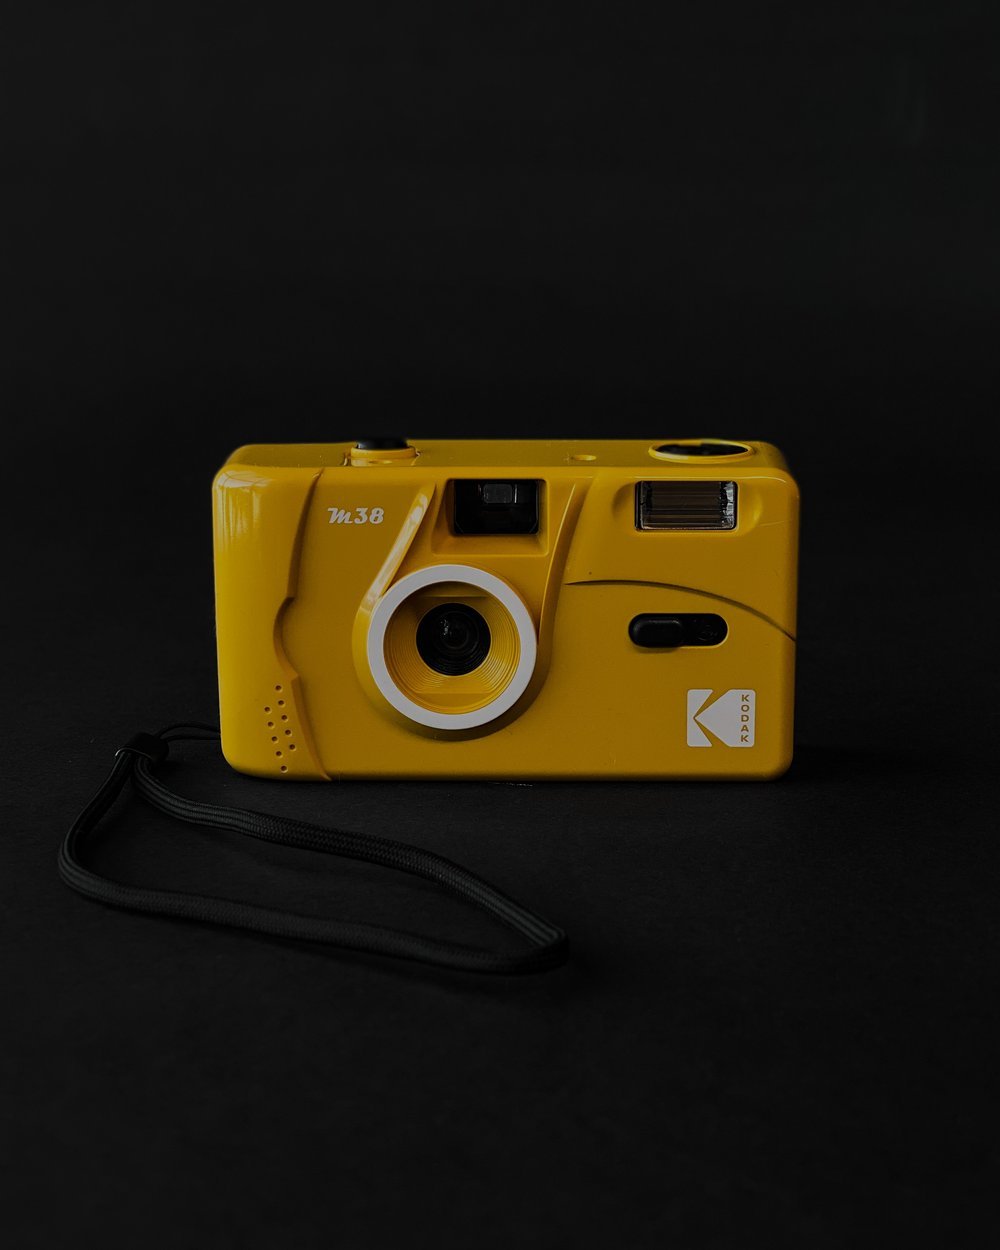  Cámara de película reutilizable Kodak M35, enfoque